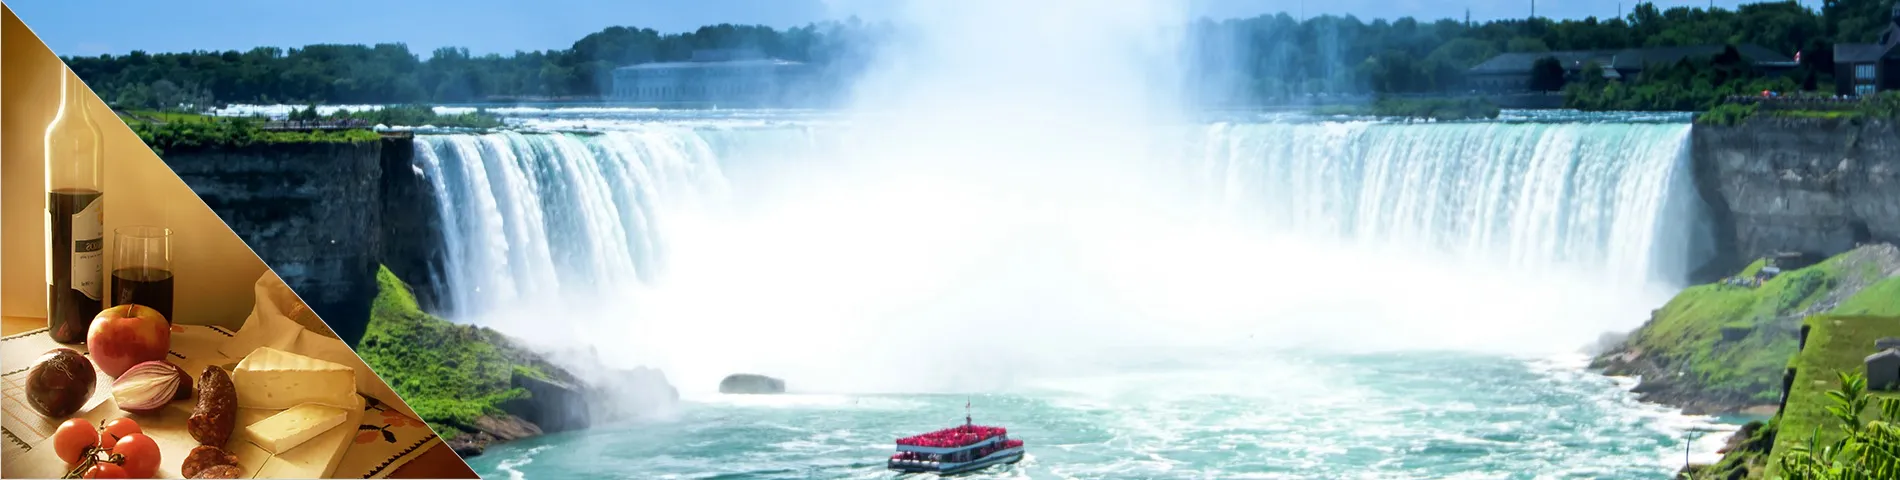 Welland (Niagara Falls) - 